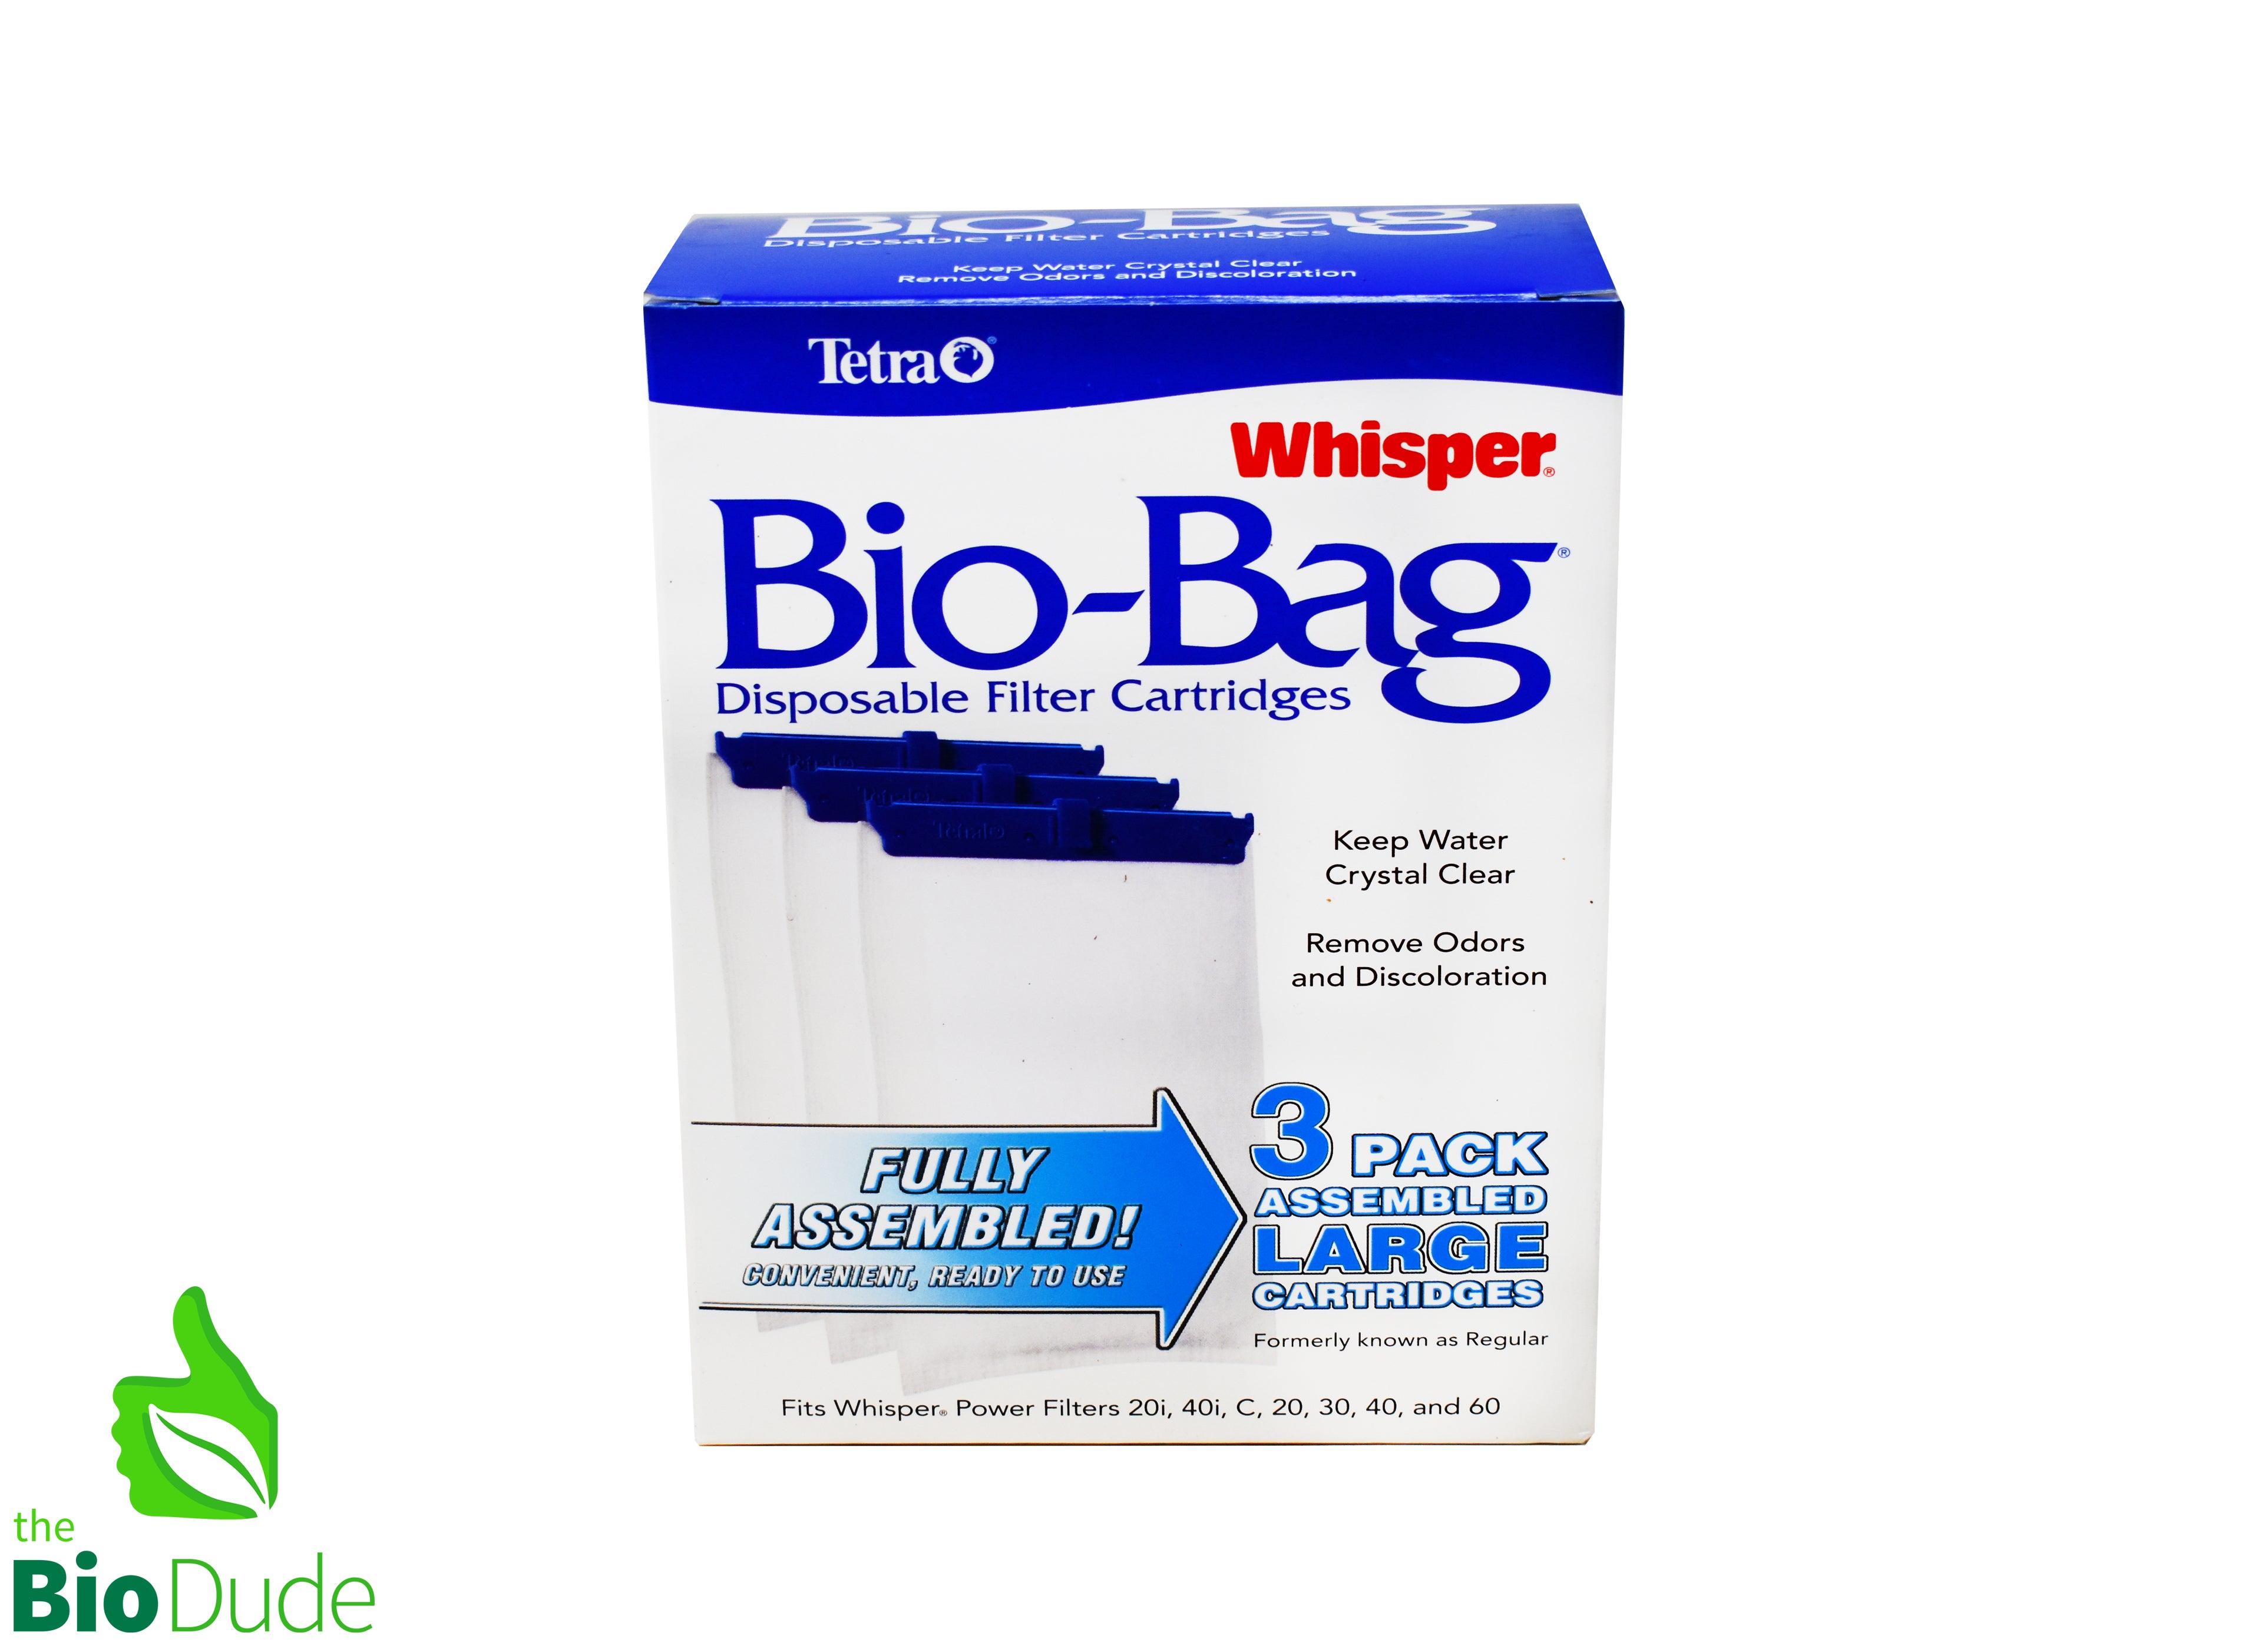 Tetra Whisper Bio-Bag Disposable Filter Cartridges, For aquariums, 2-Count  : Aquarium Filters : Pet Supplies - Amazon.com